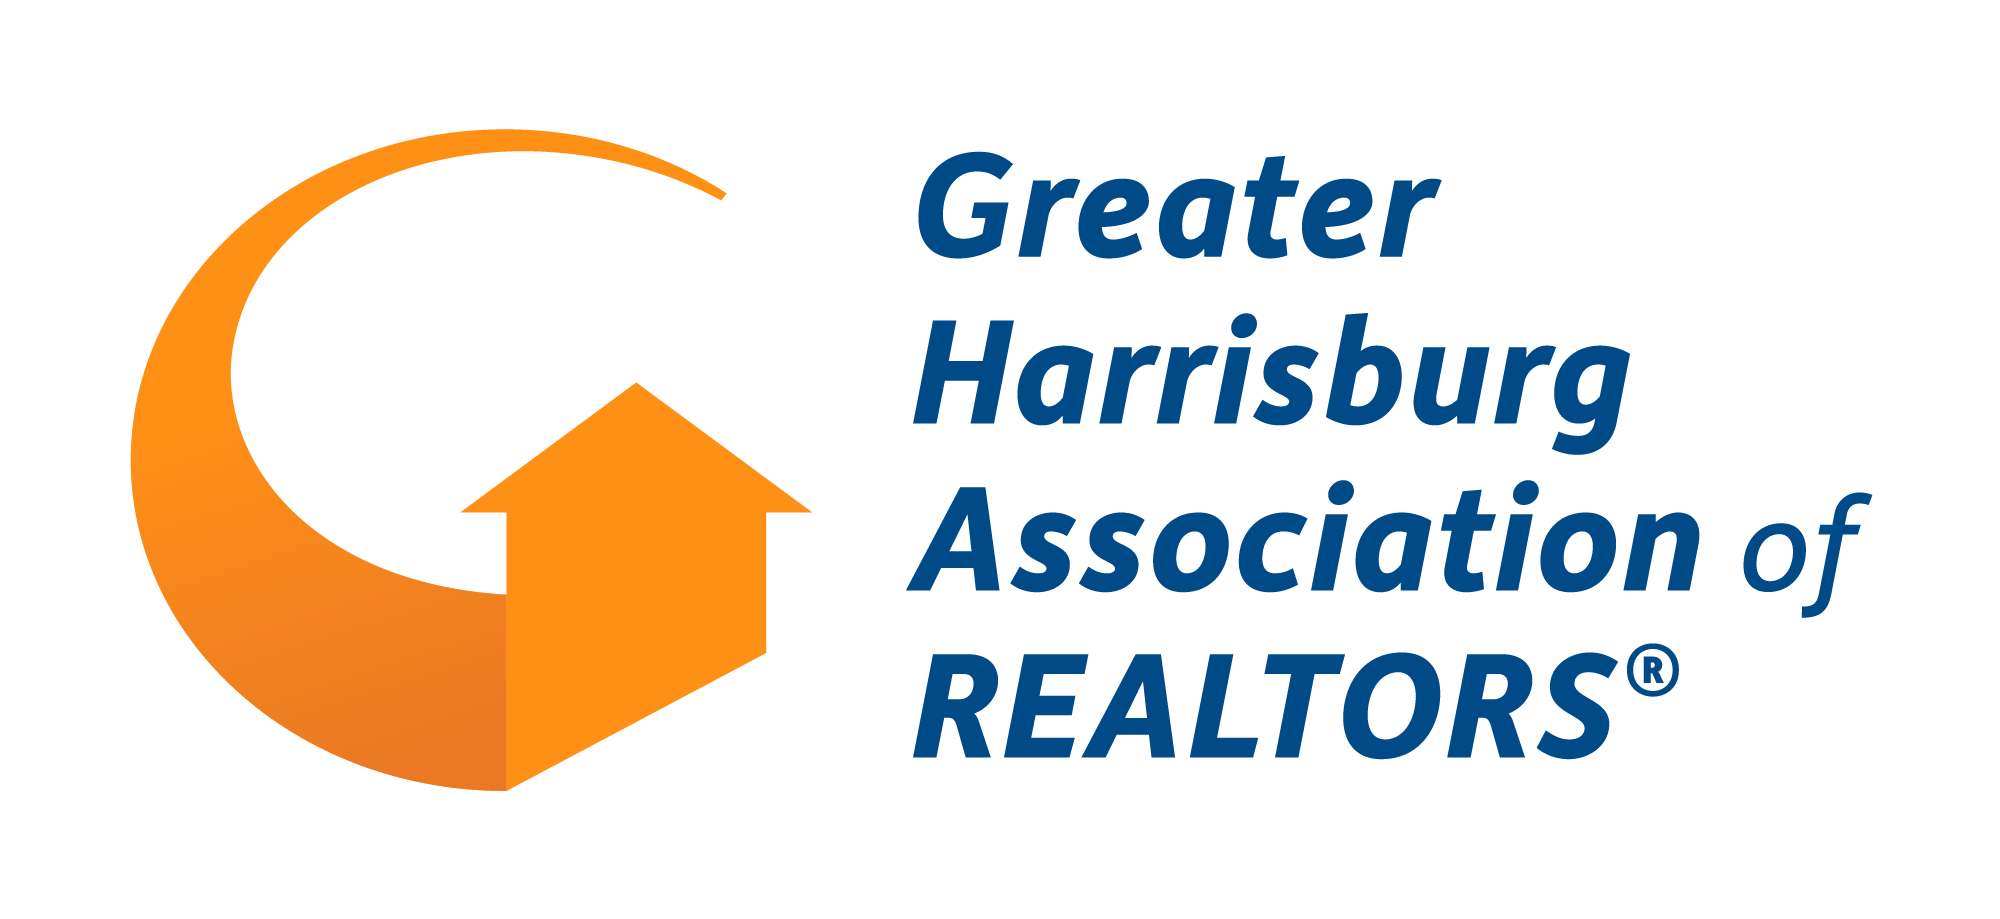 Greater Harrisburg Association of REALTORS®